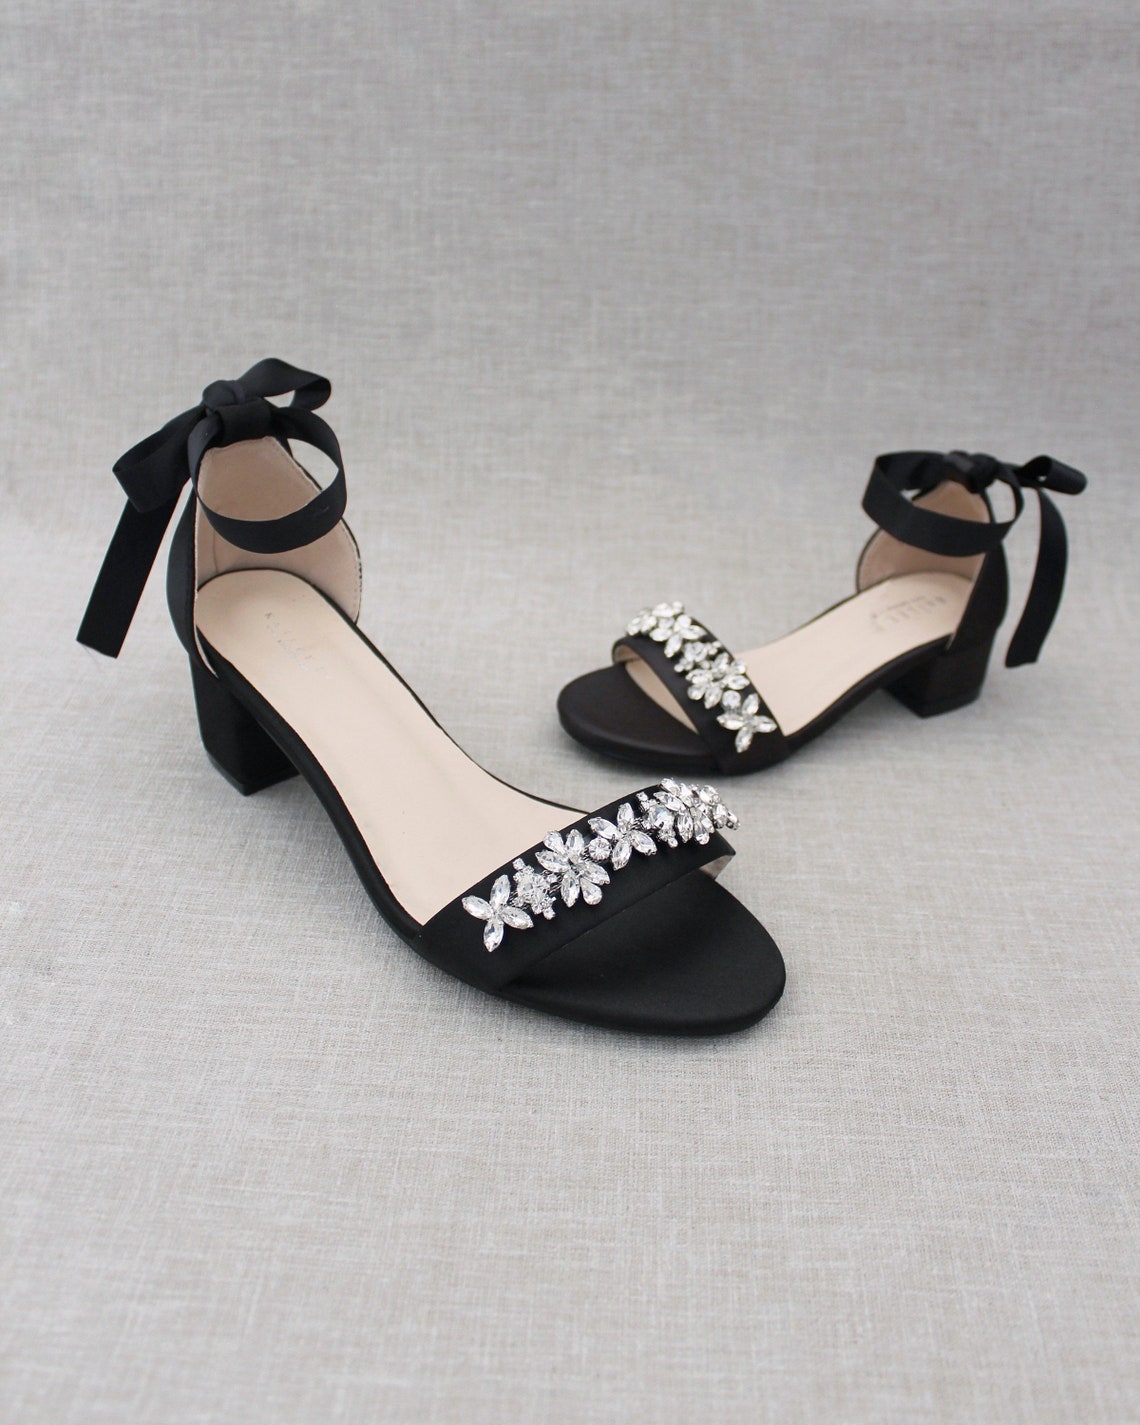 Black Satin Block Heel Sandals with FLORAL RHINESTONES on image 1